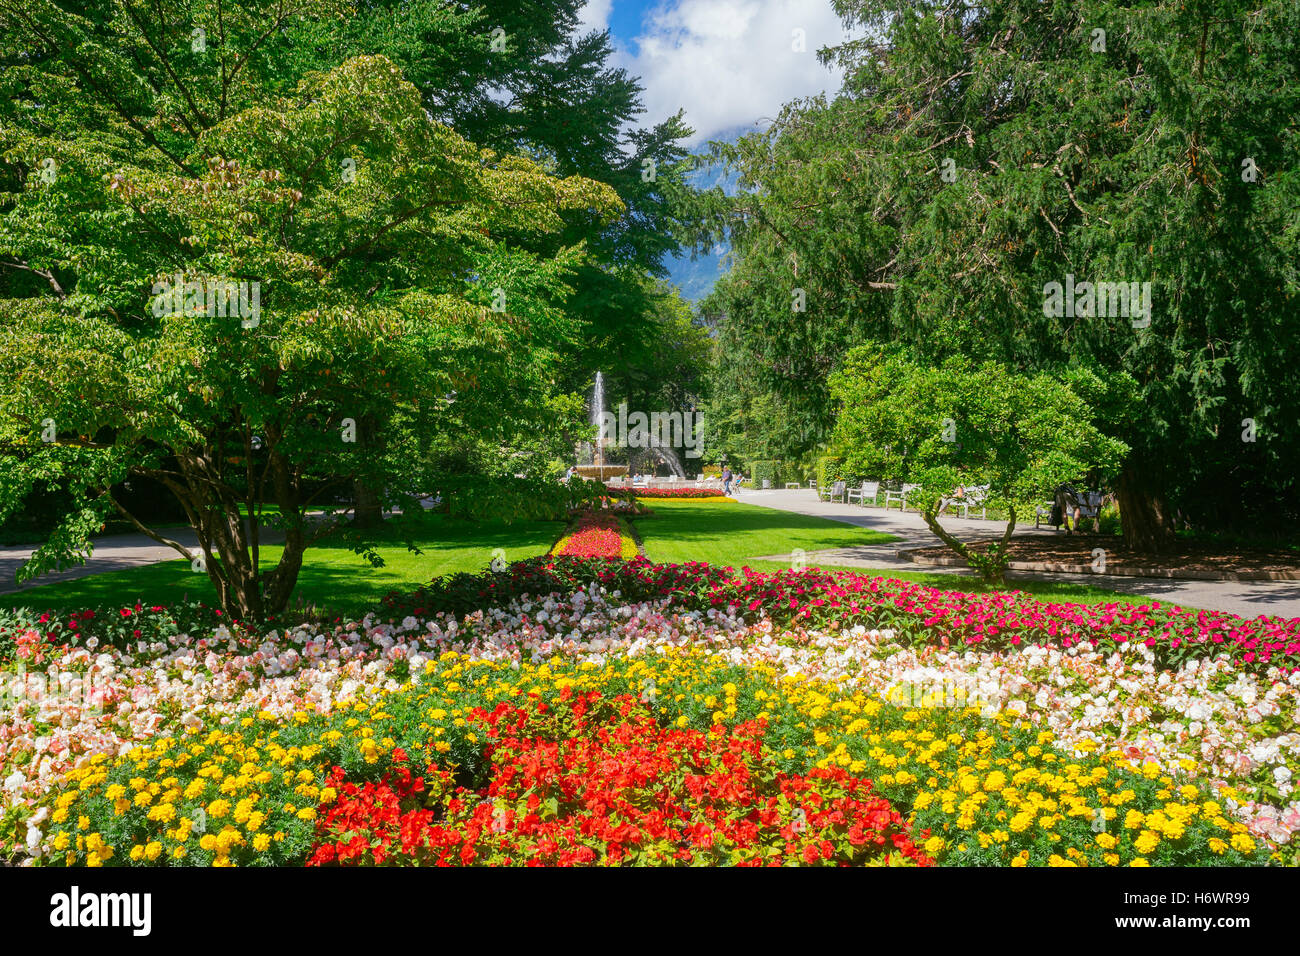 Royal spa garden in resort town Bad Reichenhall, Berchtesgadener Land, Germany Stock Photo